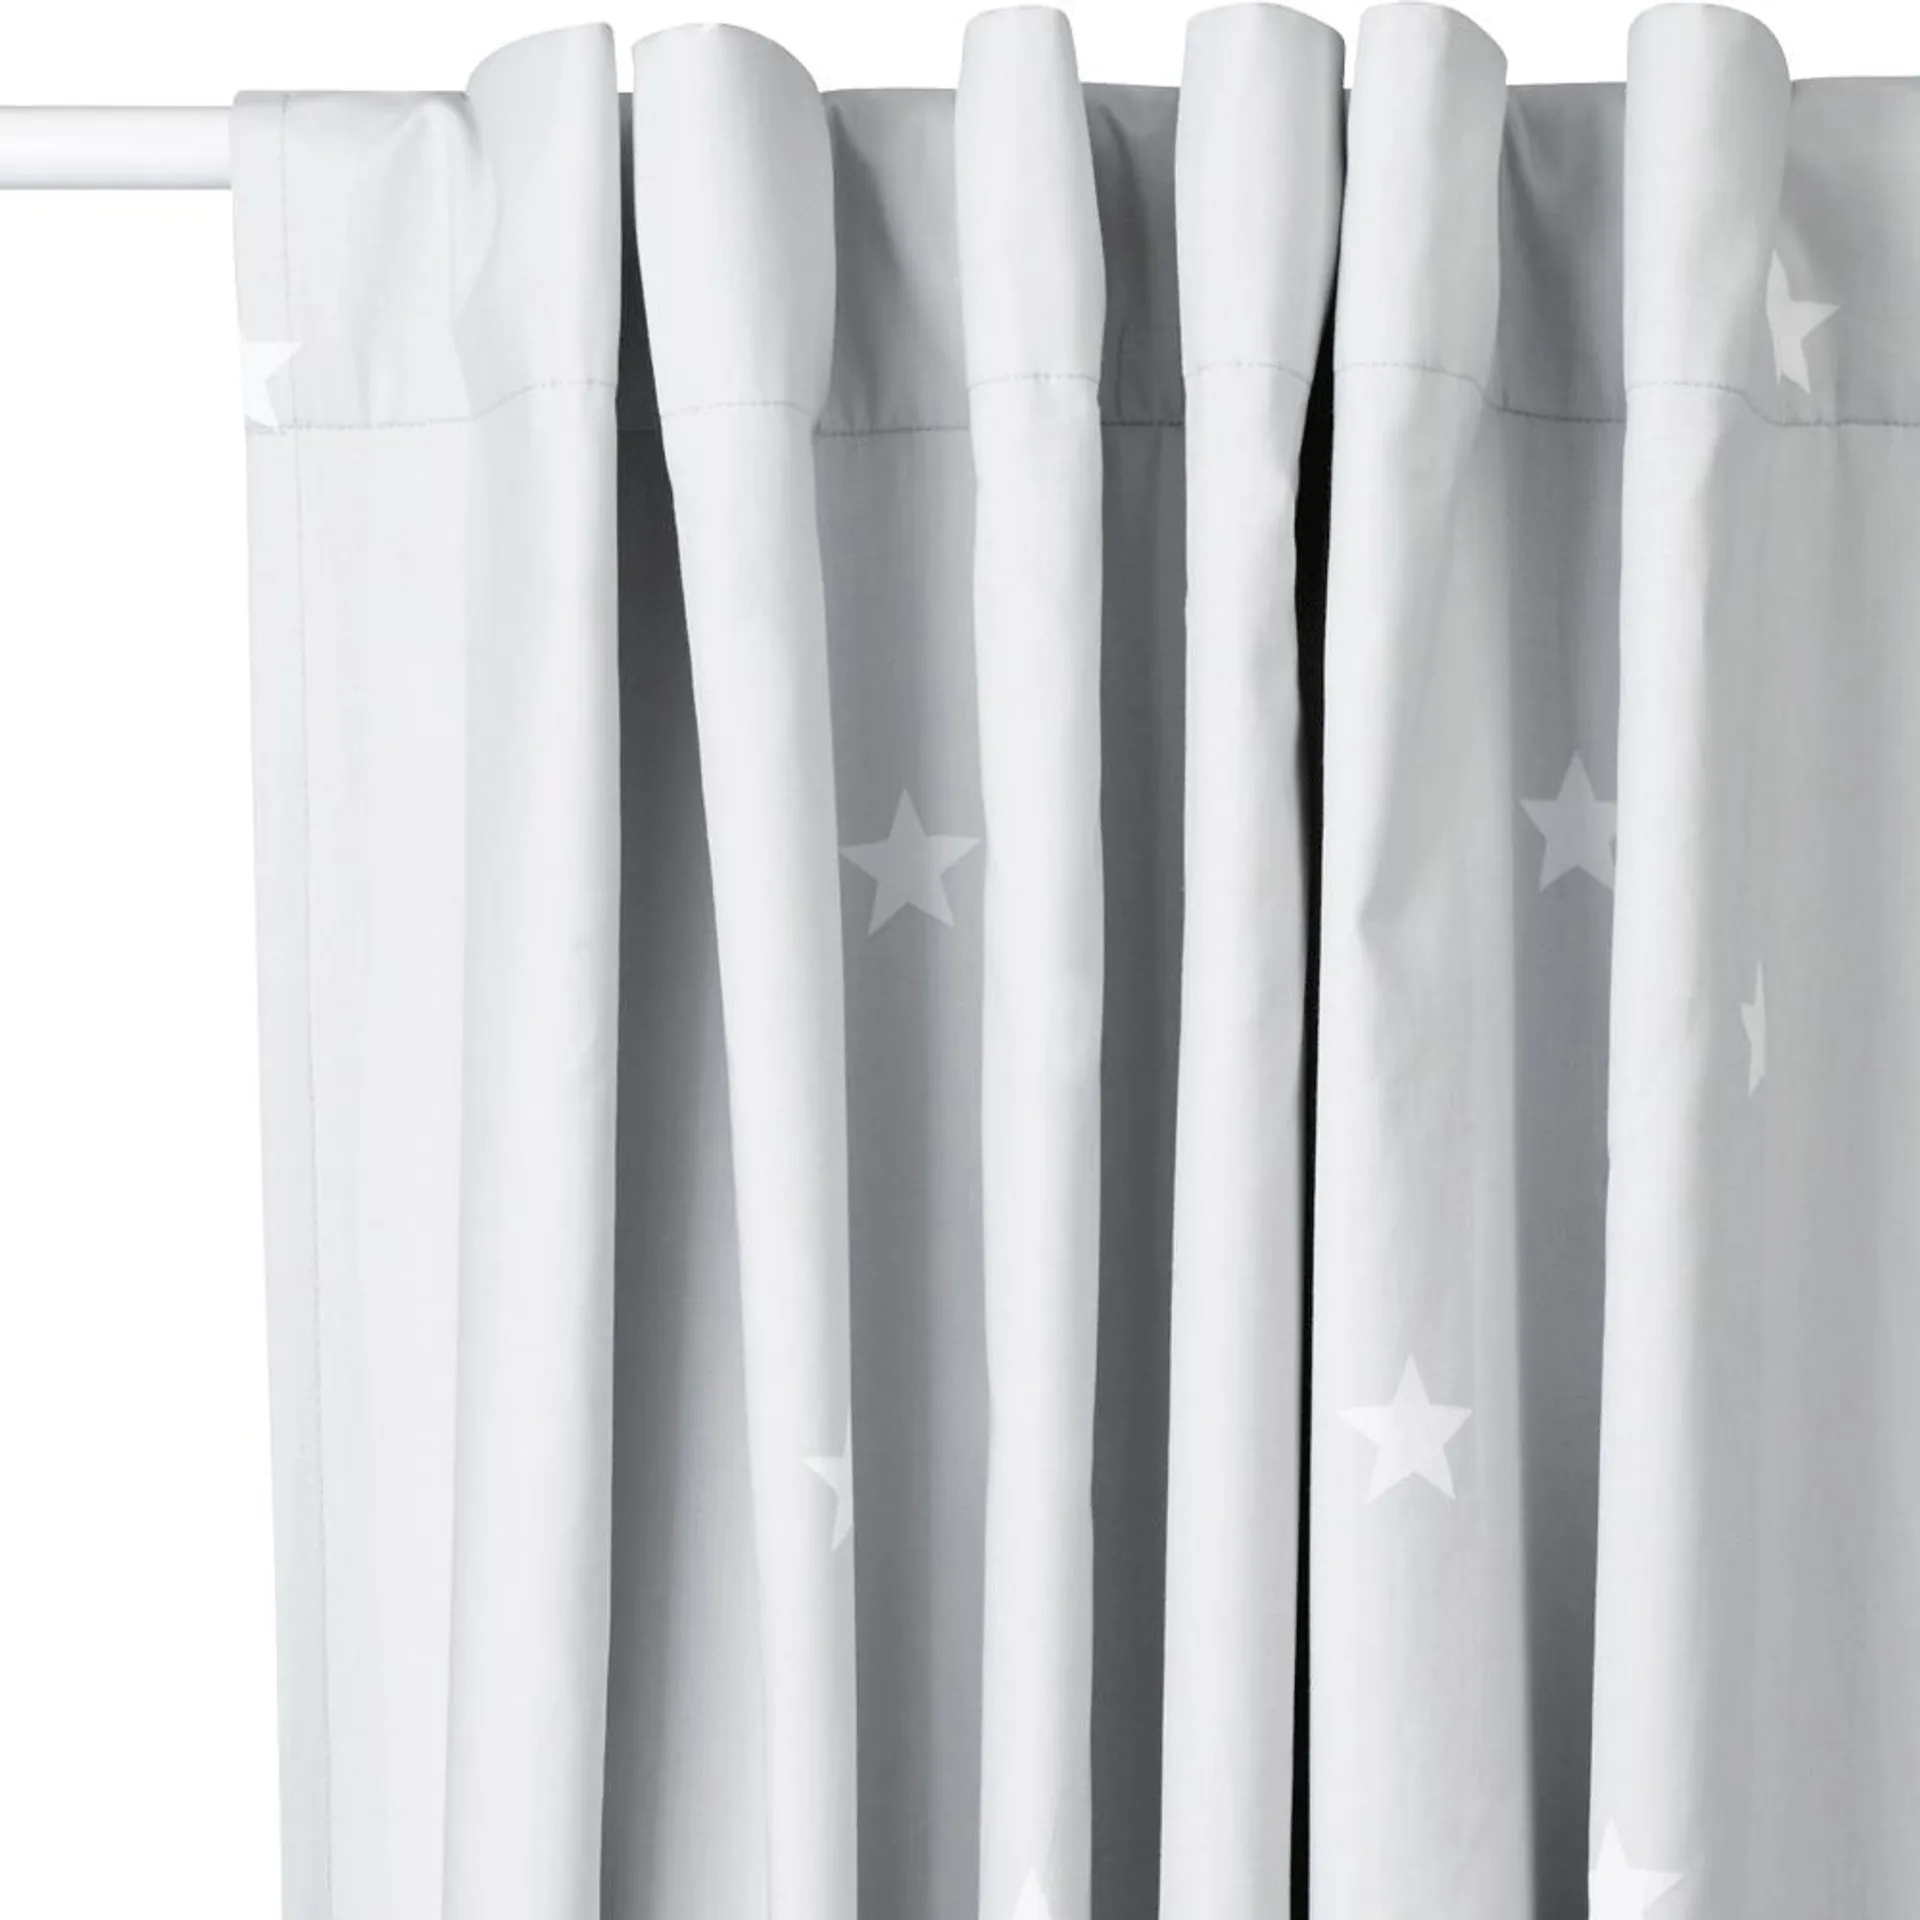 Children's Blackout Curtains - Grey Stardust, W165 x L183 cm